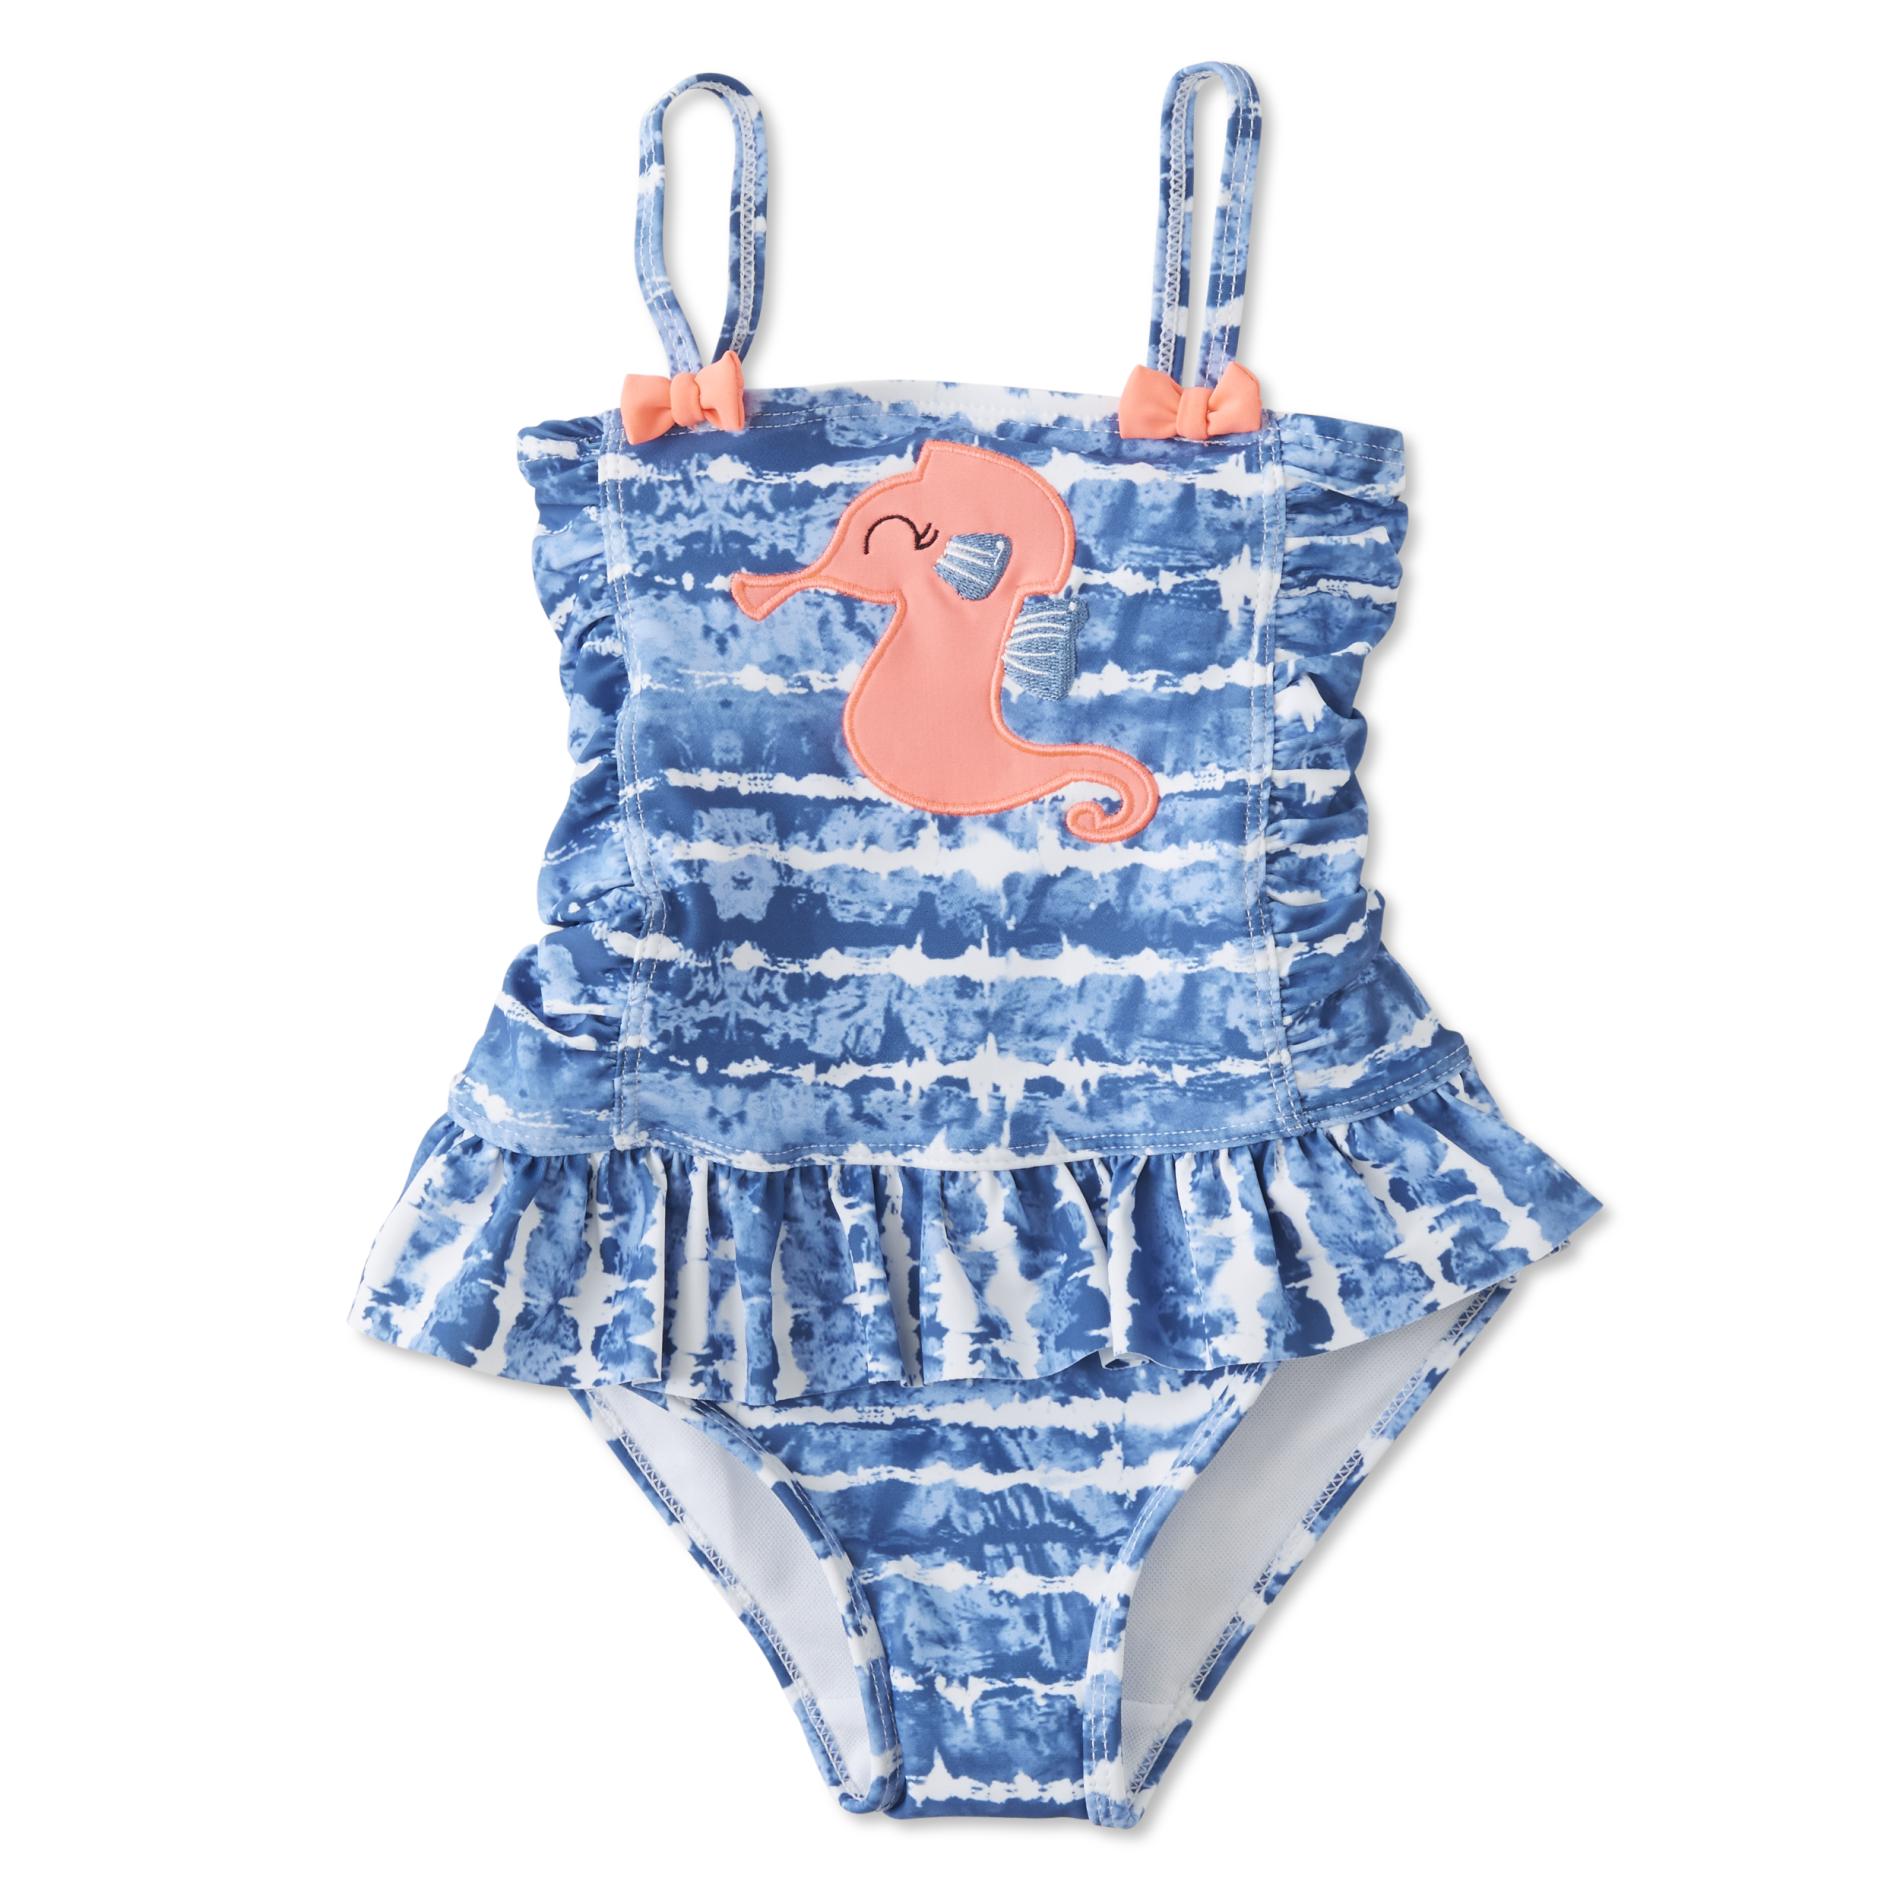 WonderKids Infant & Toddler Girls Swimsuit - Tie-Dye & Sea Horse